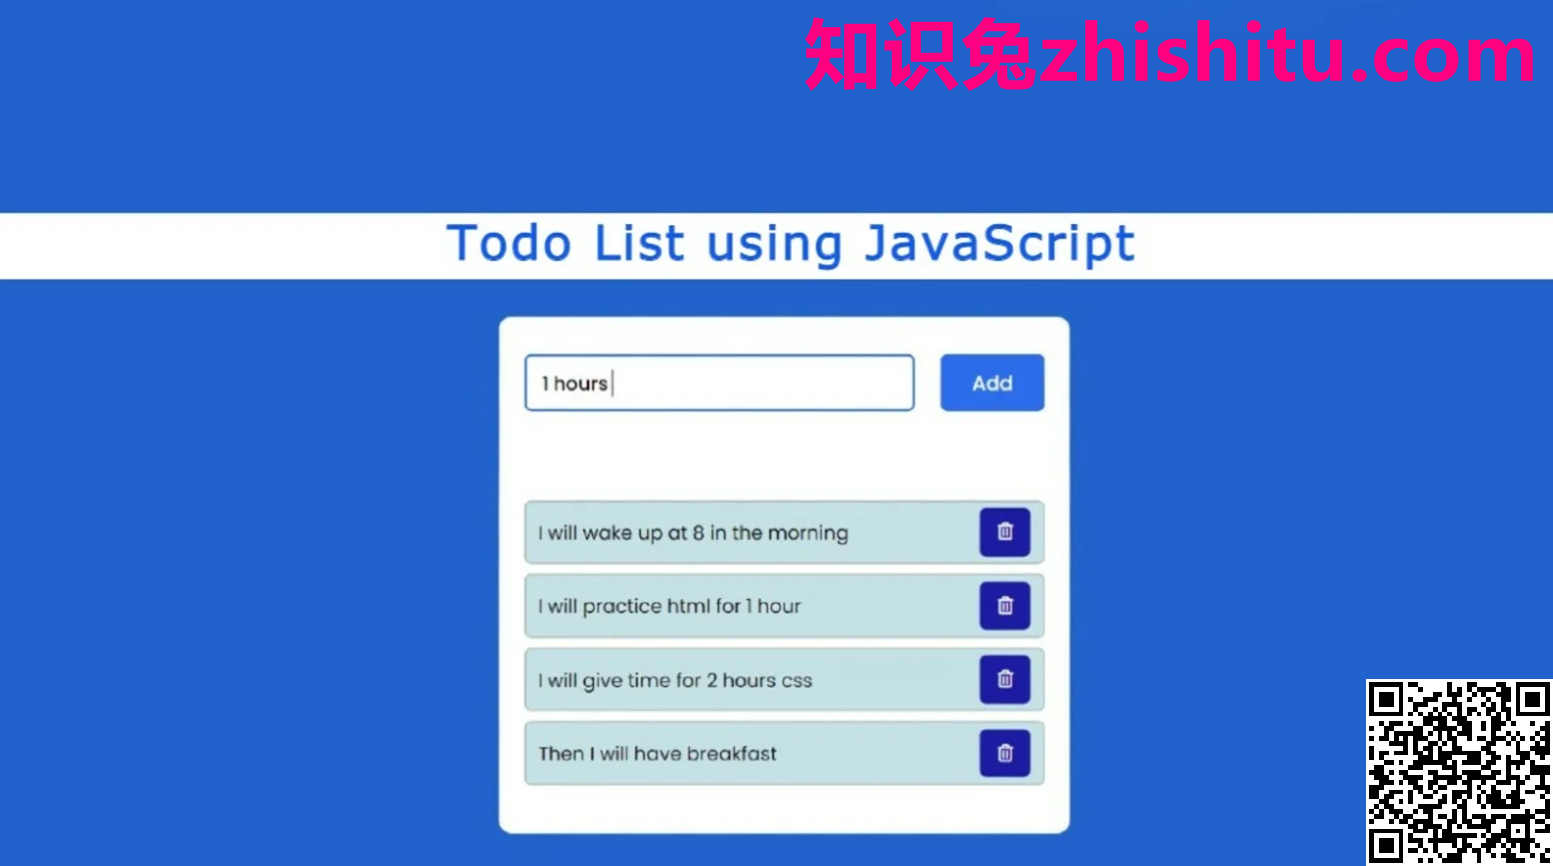 ToDoList v8.1.11.0 程序员应用笔记和任务管理